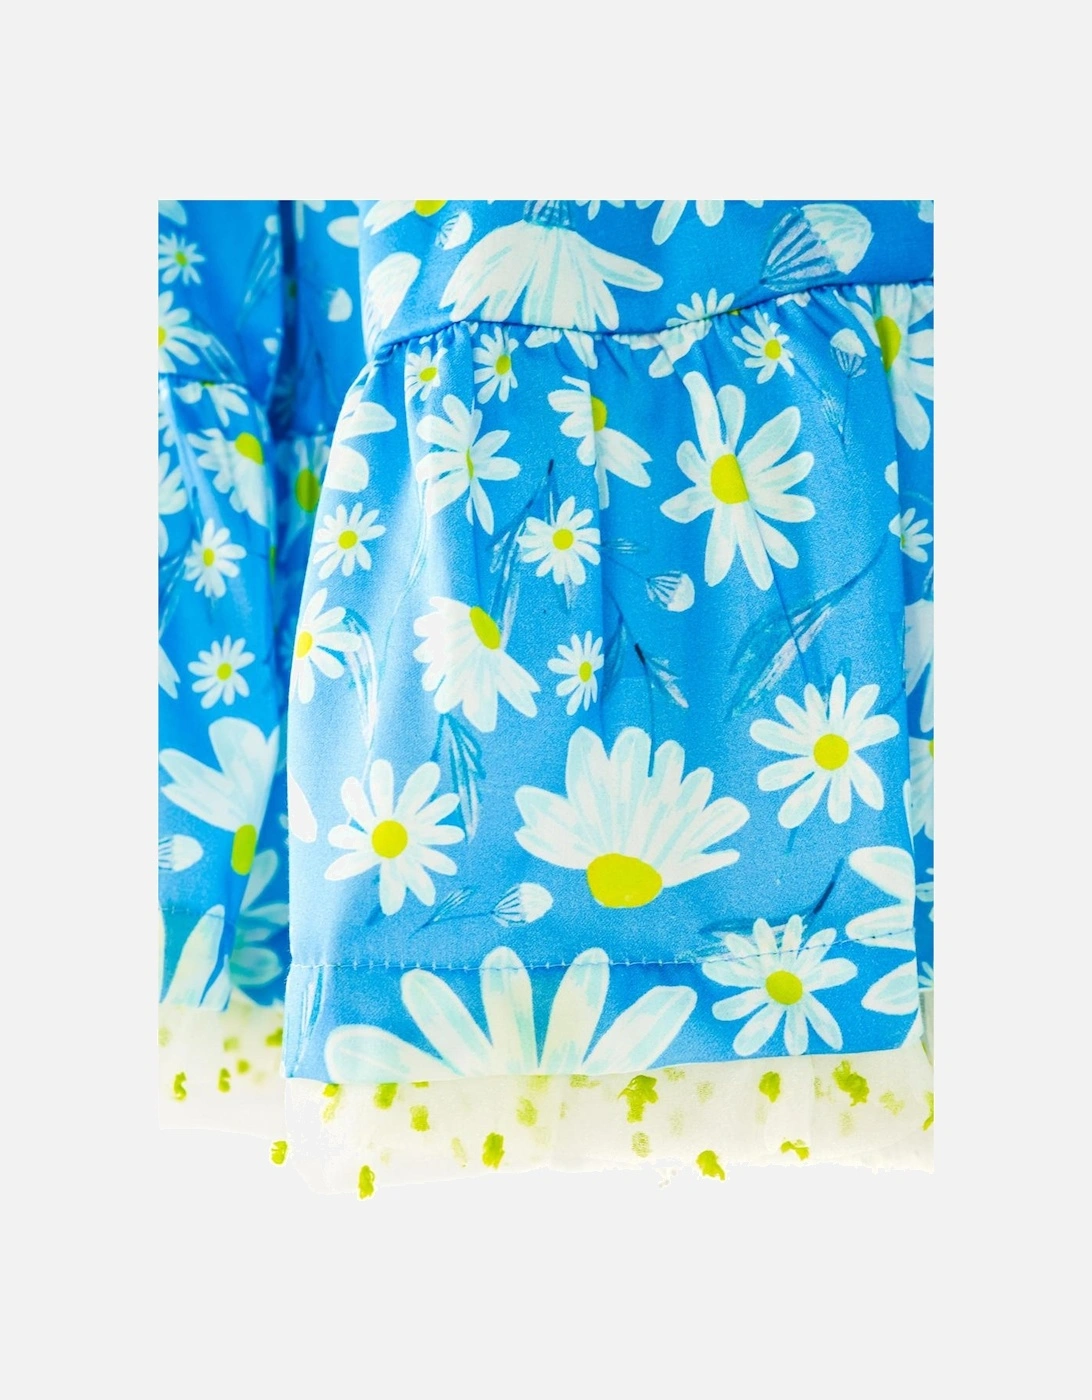 Blue Daisy Puff Sleeve Dress